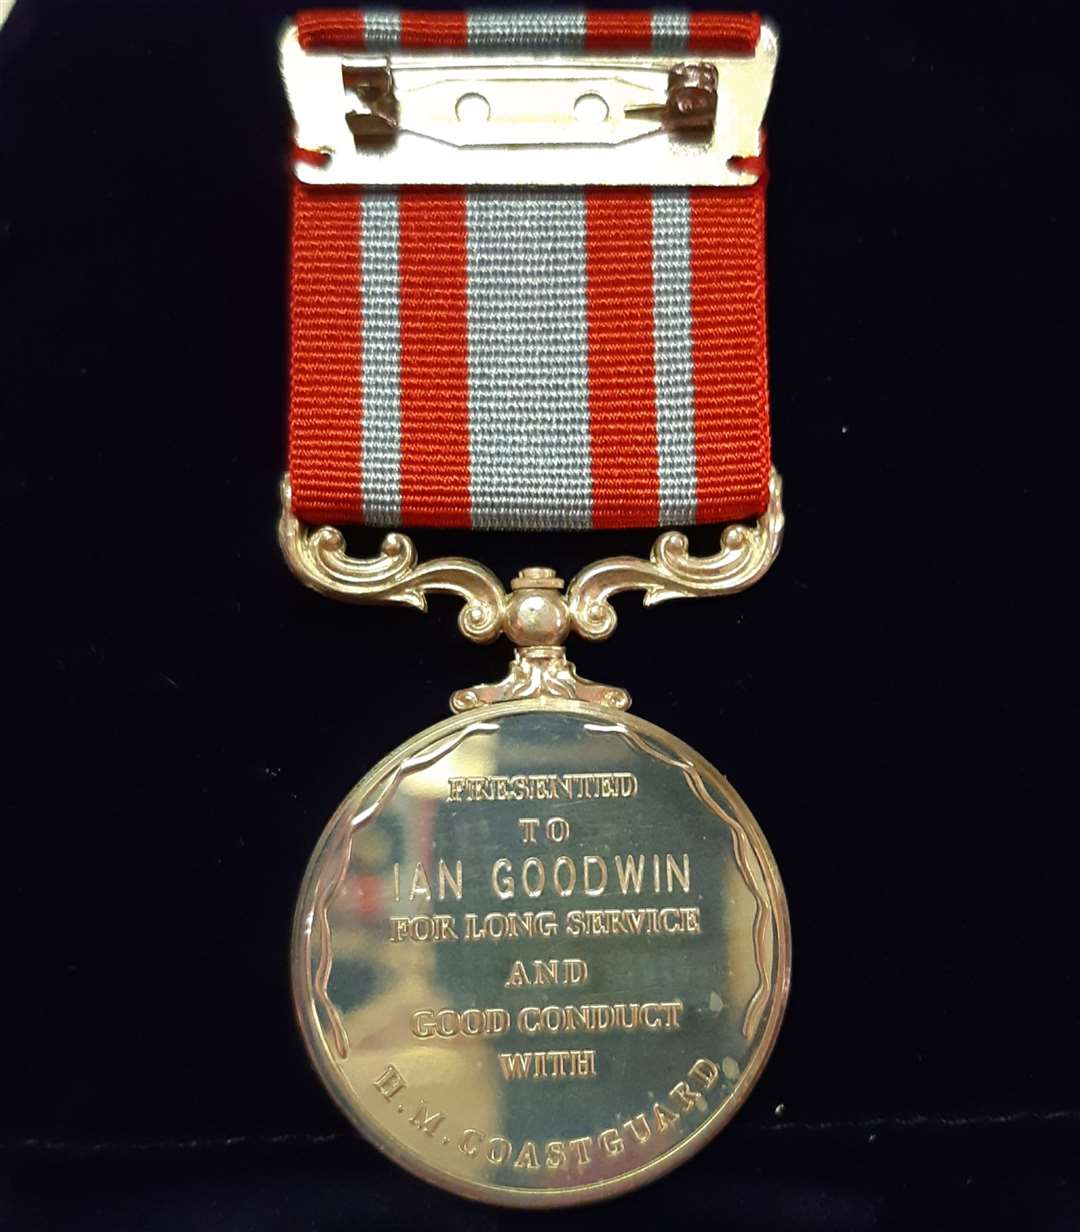 Ian Goodwin's long service medal